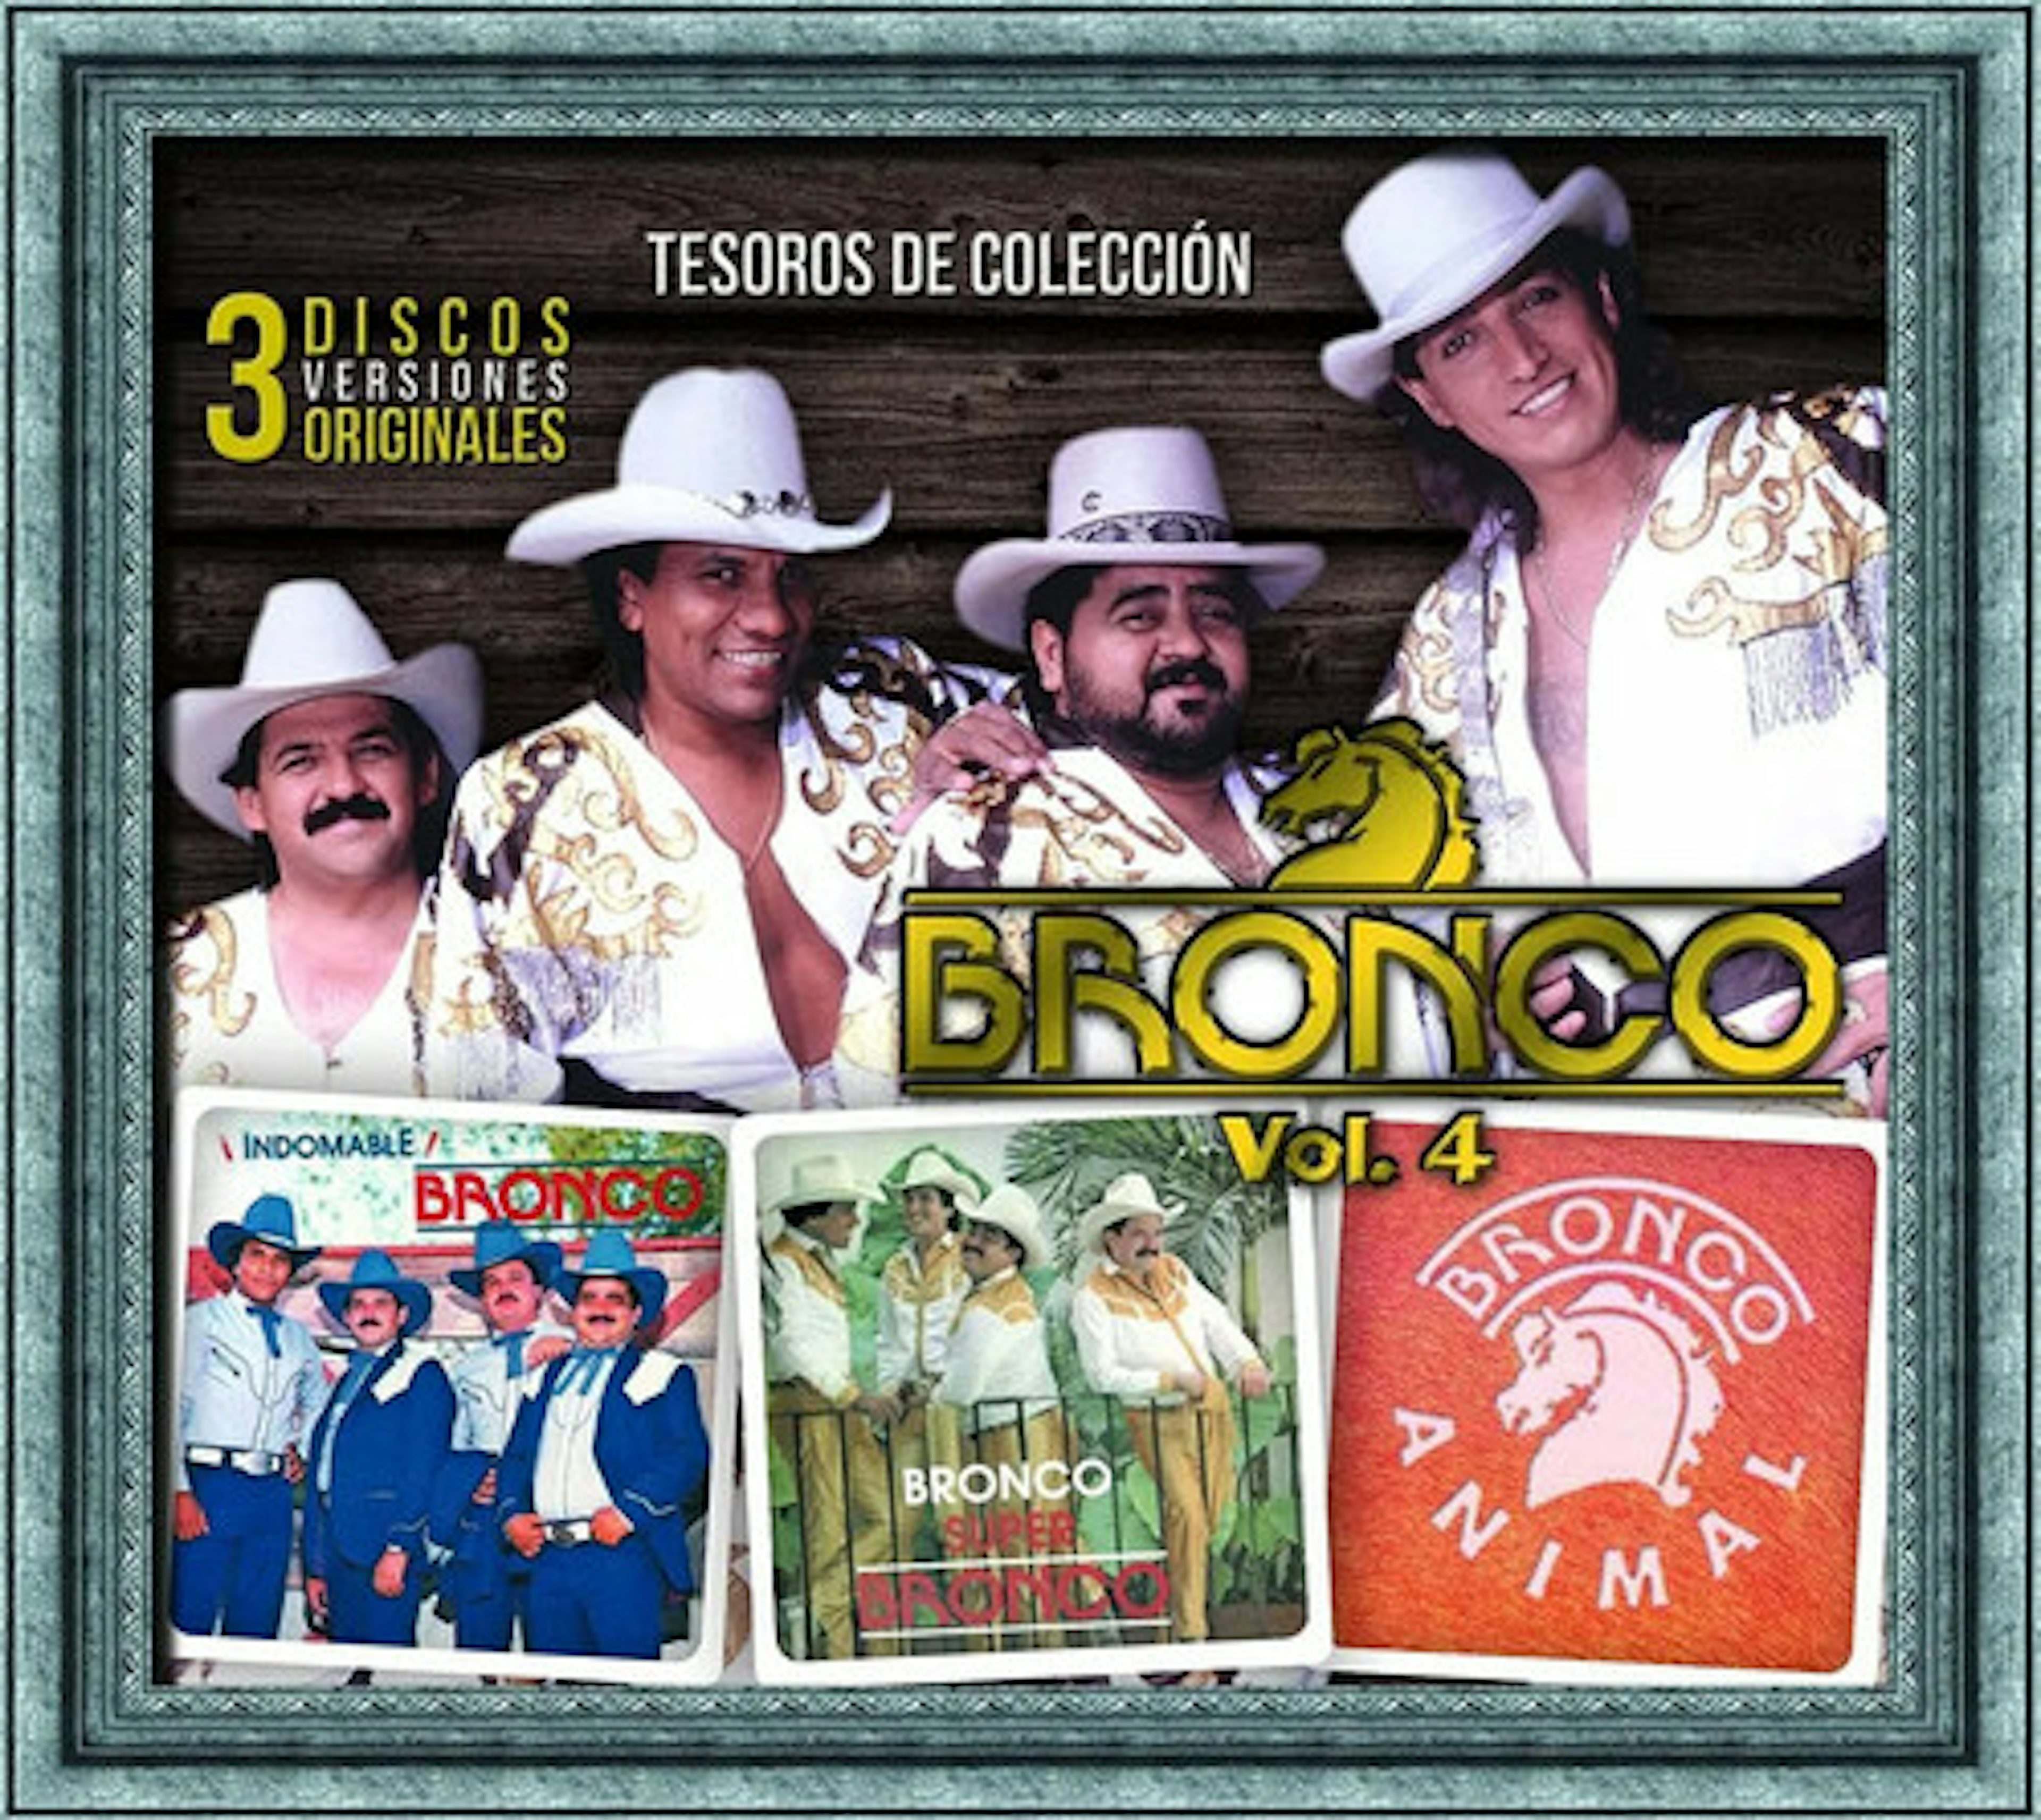 Bronco TESOROS DE COLECCION VOLUME 4 CD